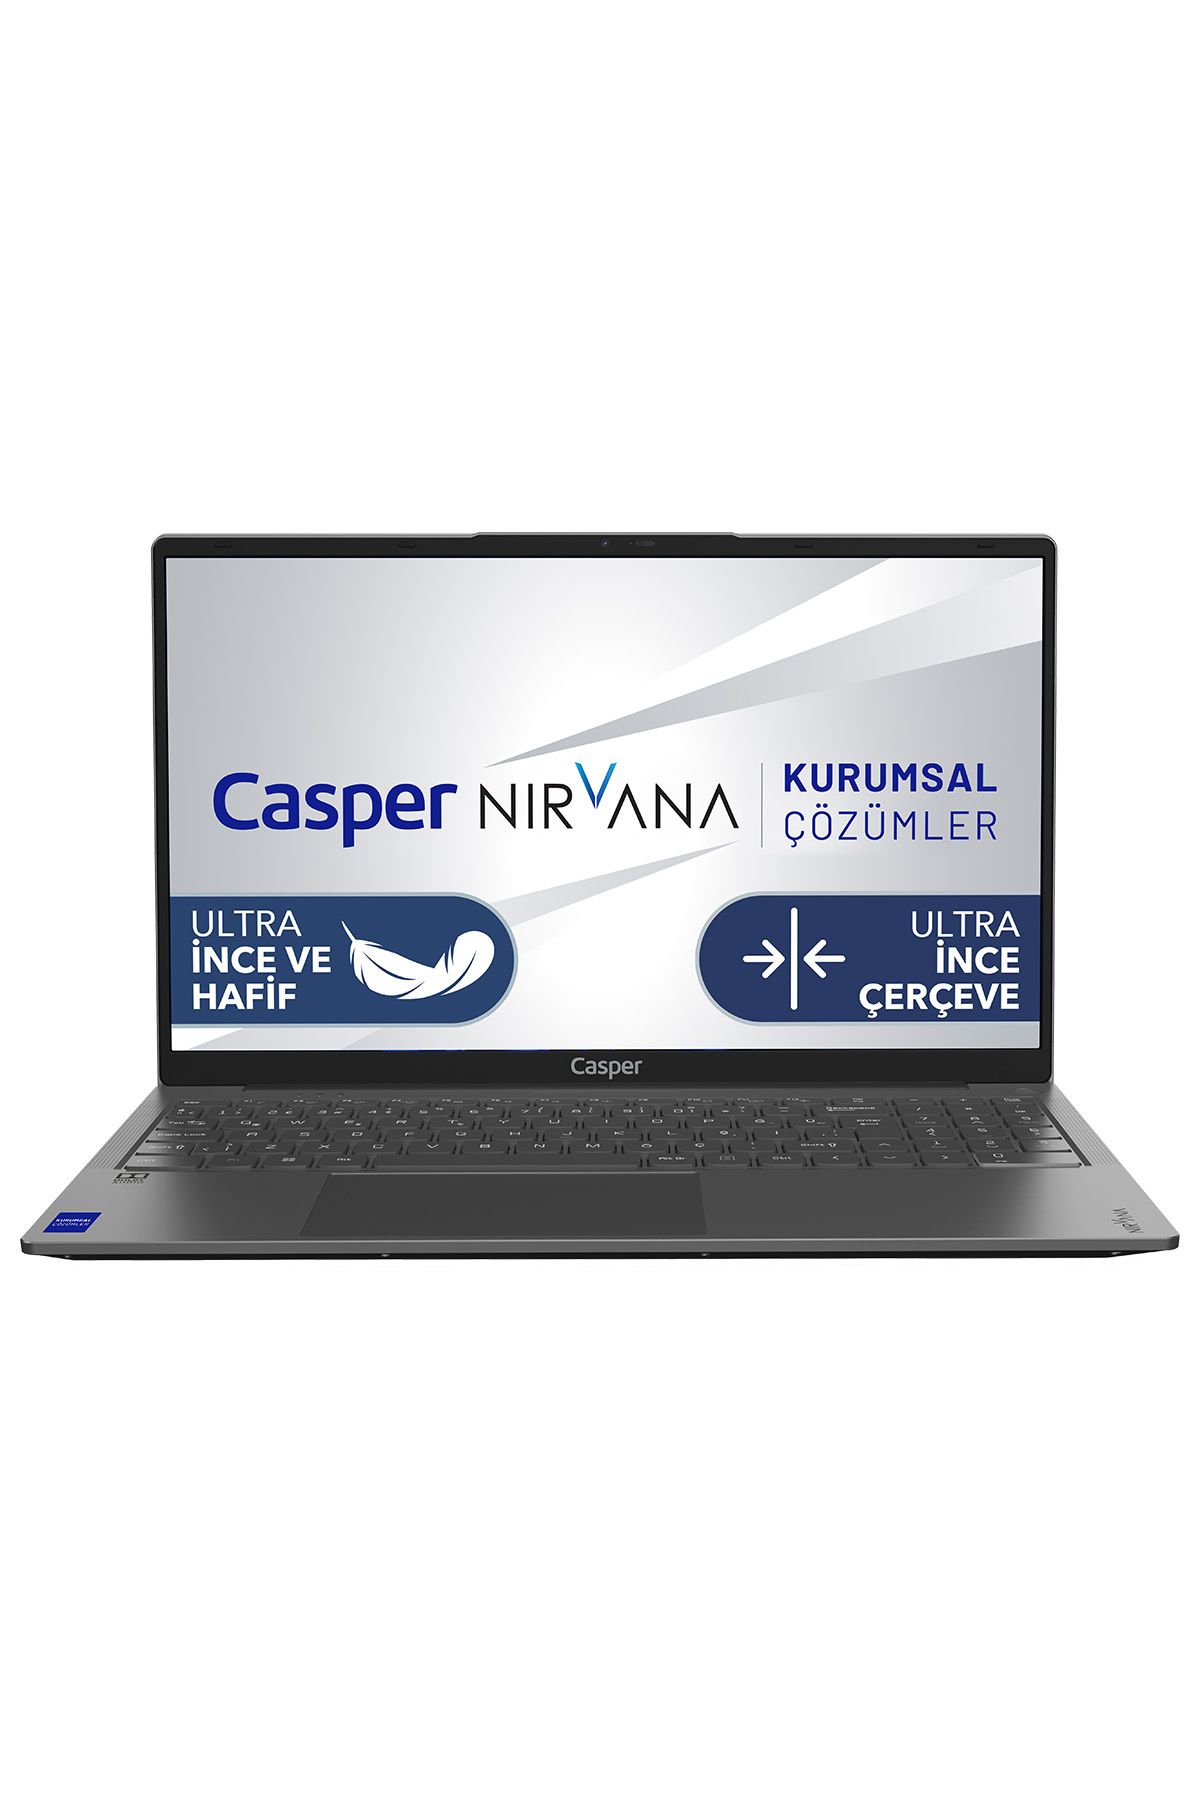 Casper Nirvana X700.5700-bv00x-g-f Ryzen 7-5700u 16 Gb Ram 500gb Nvme Ssd Freedos